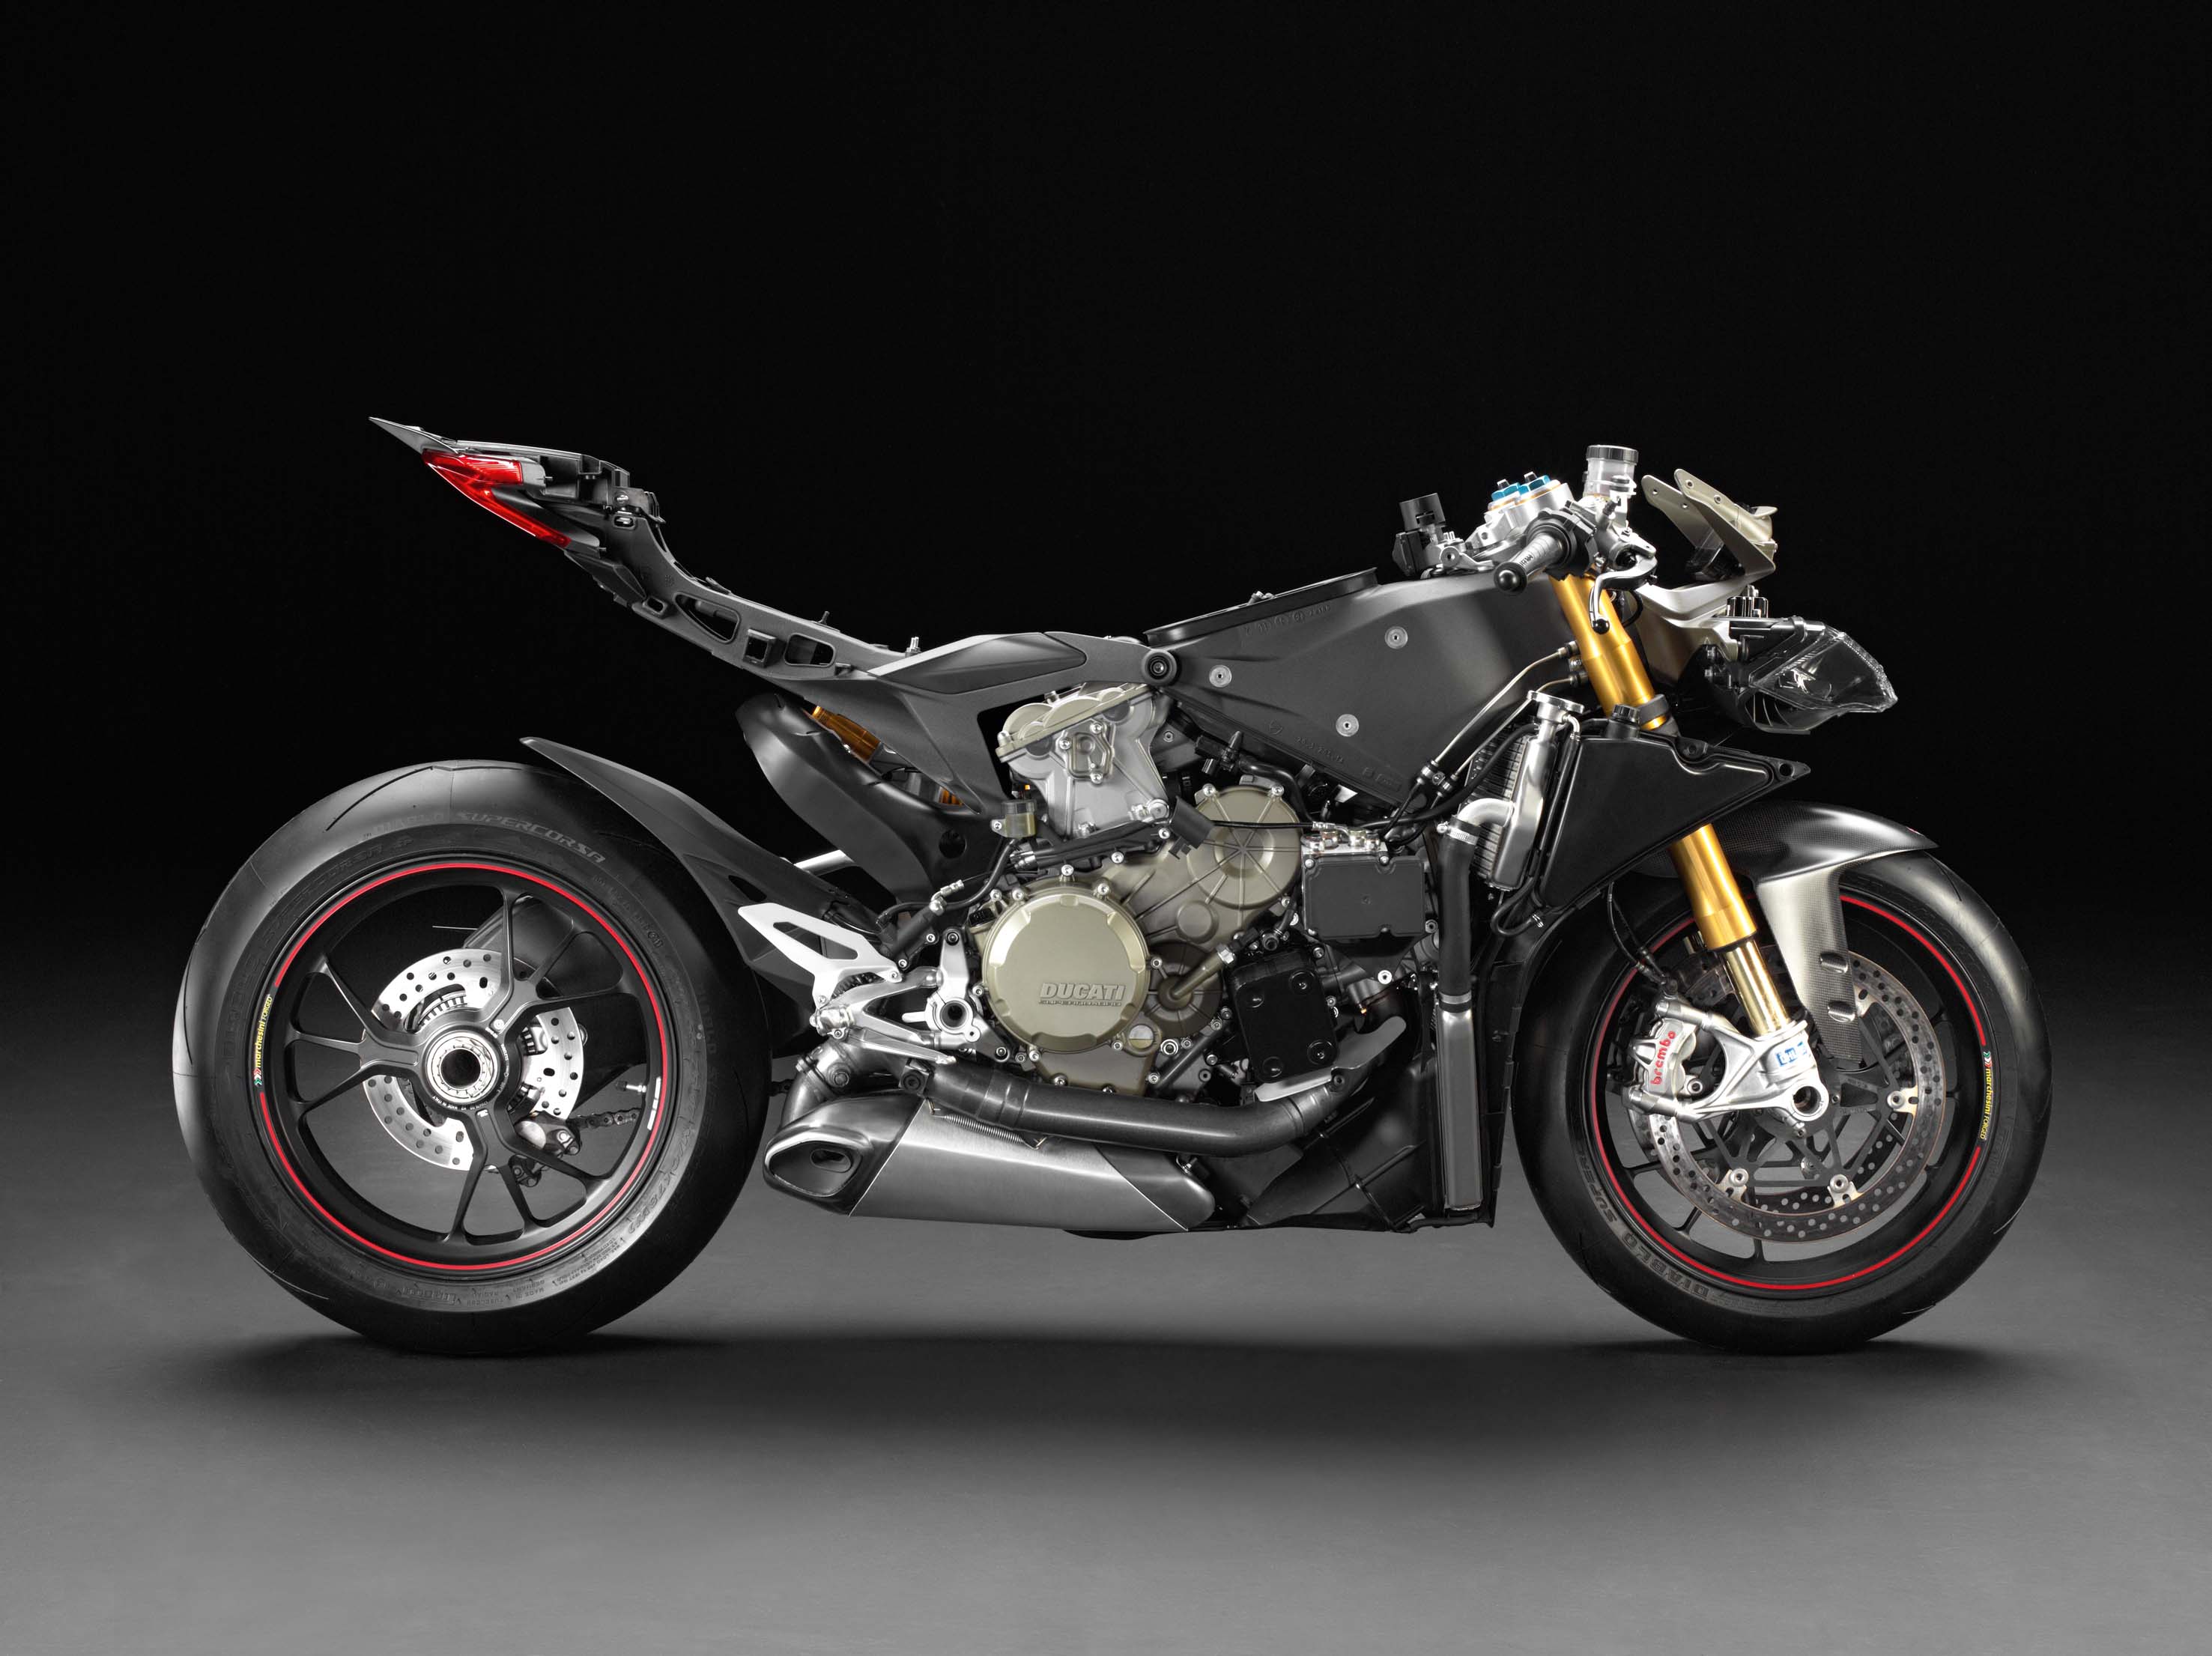 Ducati-1199-Panigale-no-fairings-01.jpg